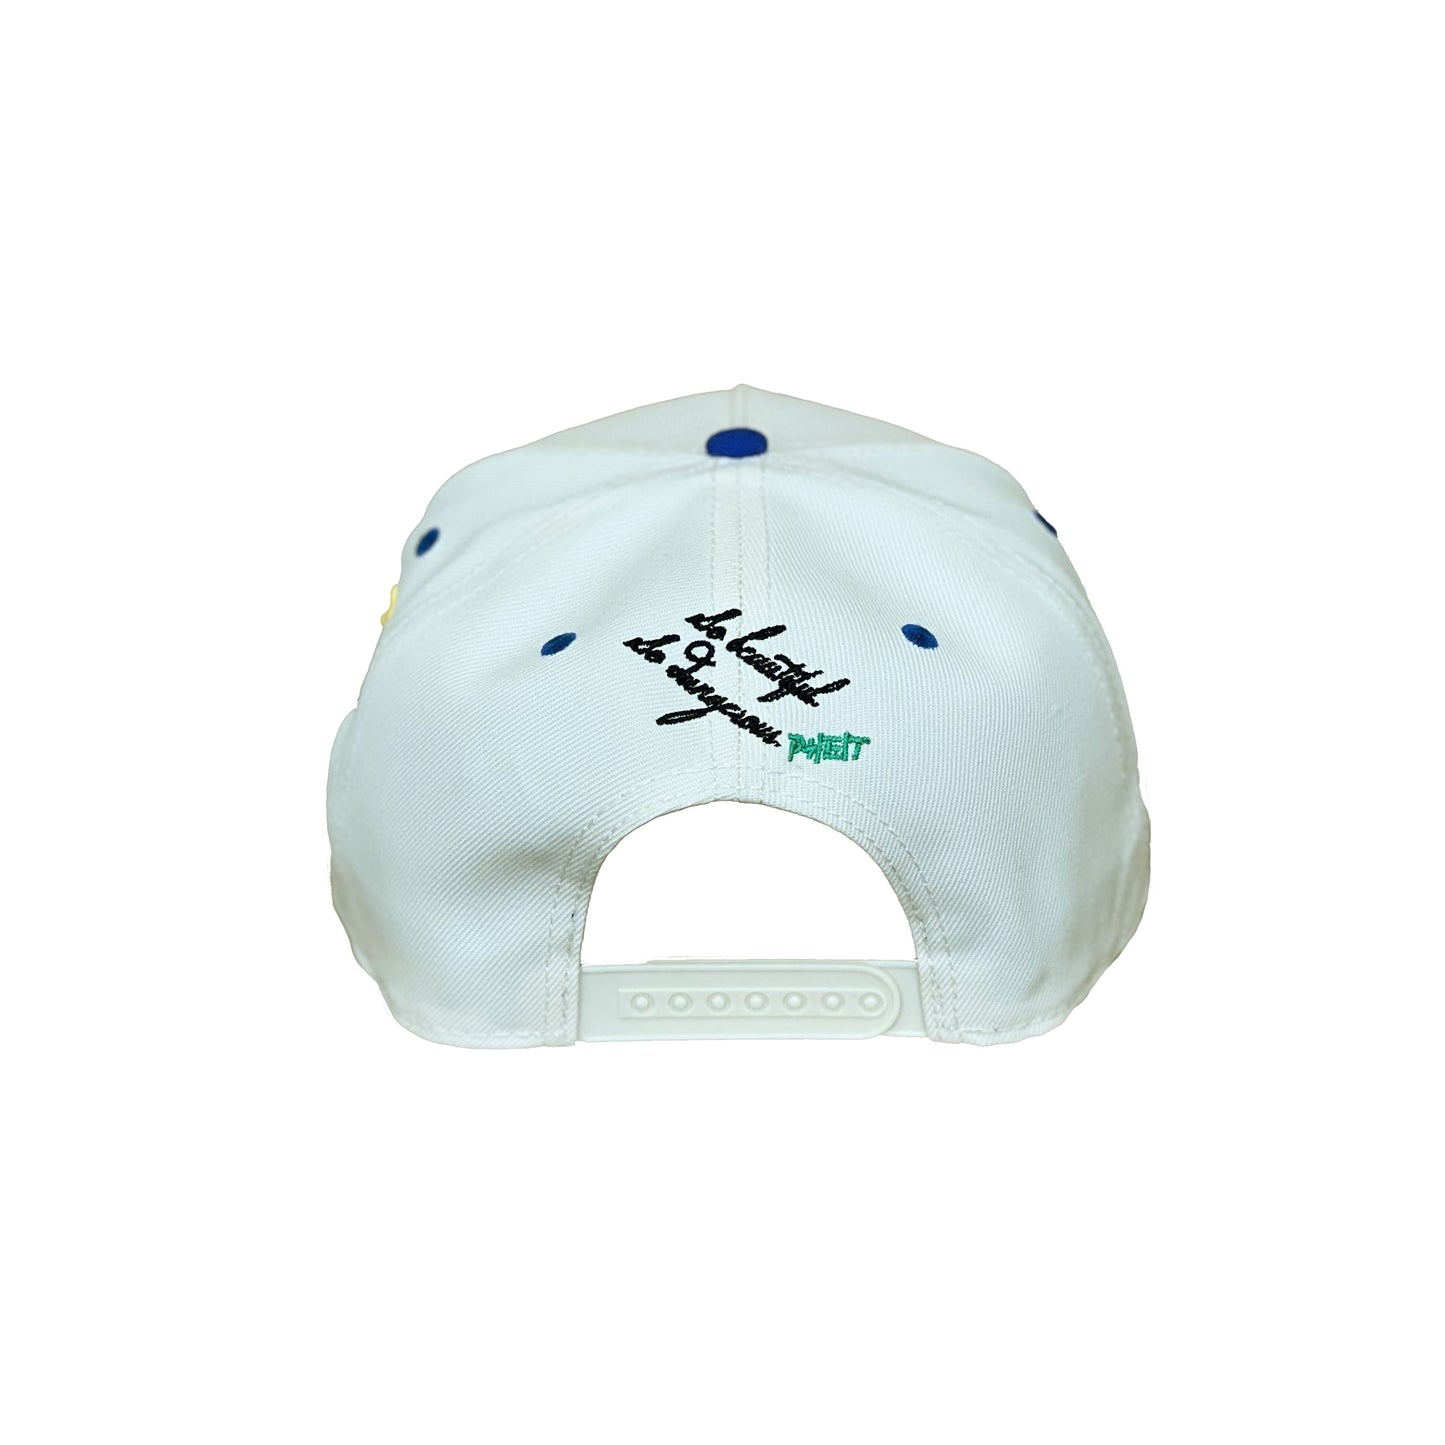 SBSD Lap 2 Racing cap (cream)